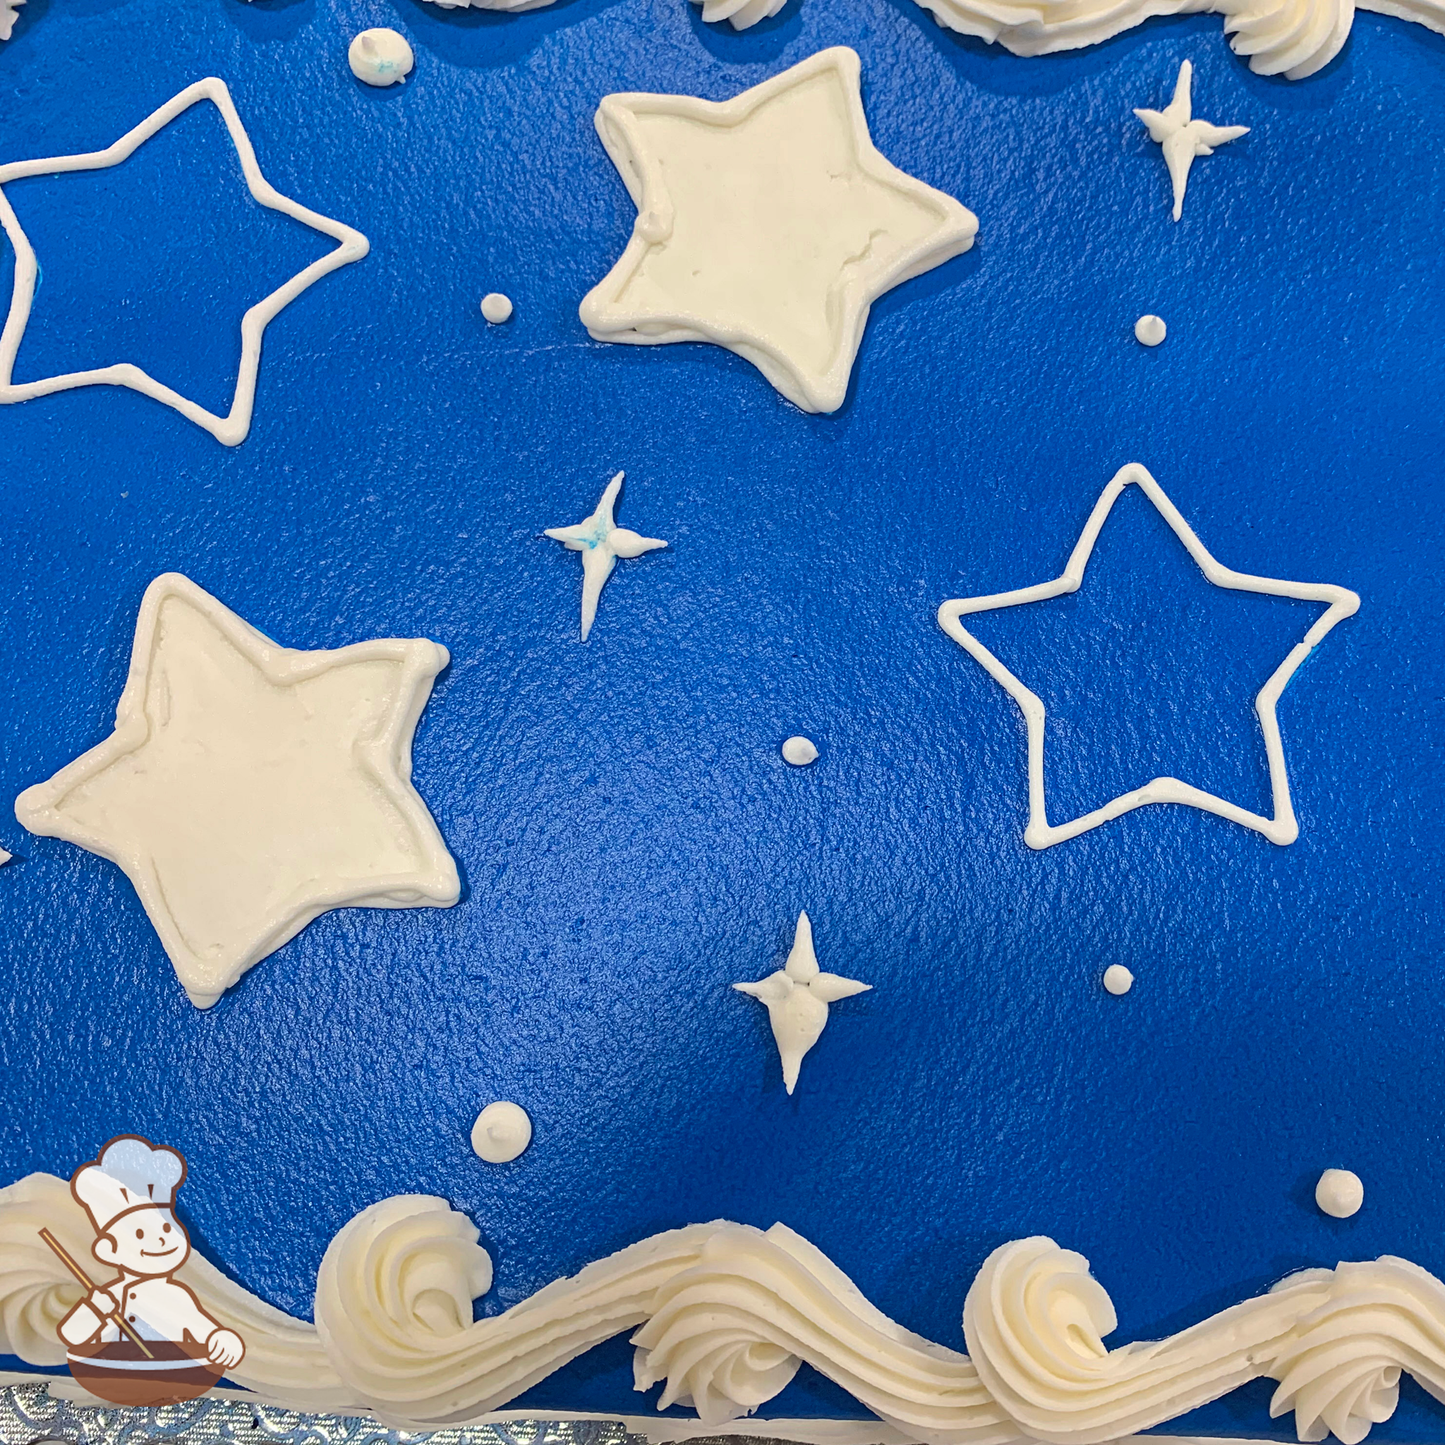 Celebration sheet cake with buttercream stars, diamond stars, dots, and outline of stars.